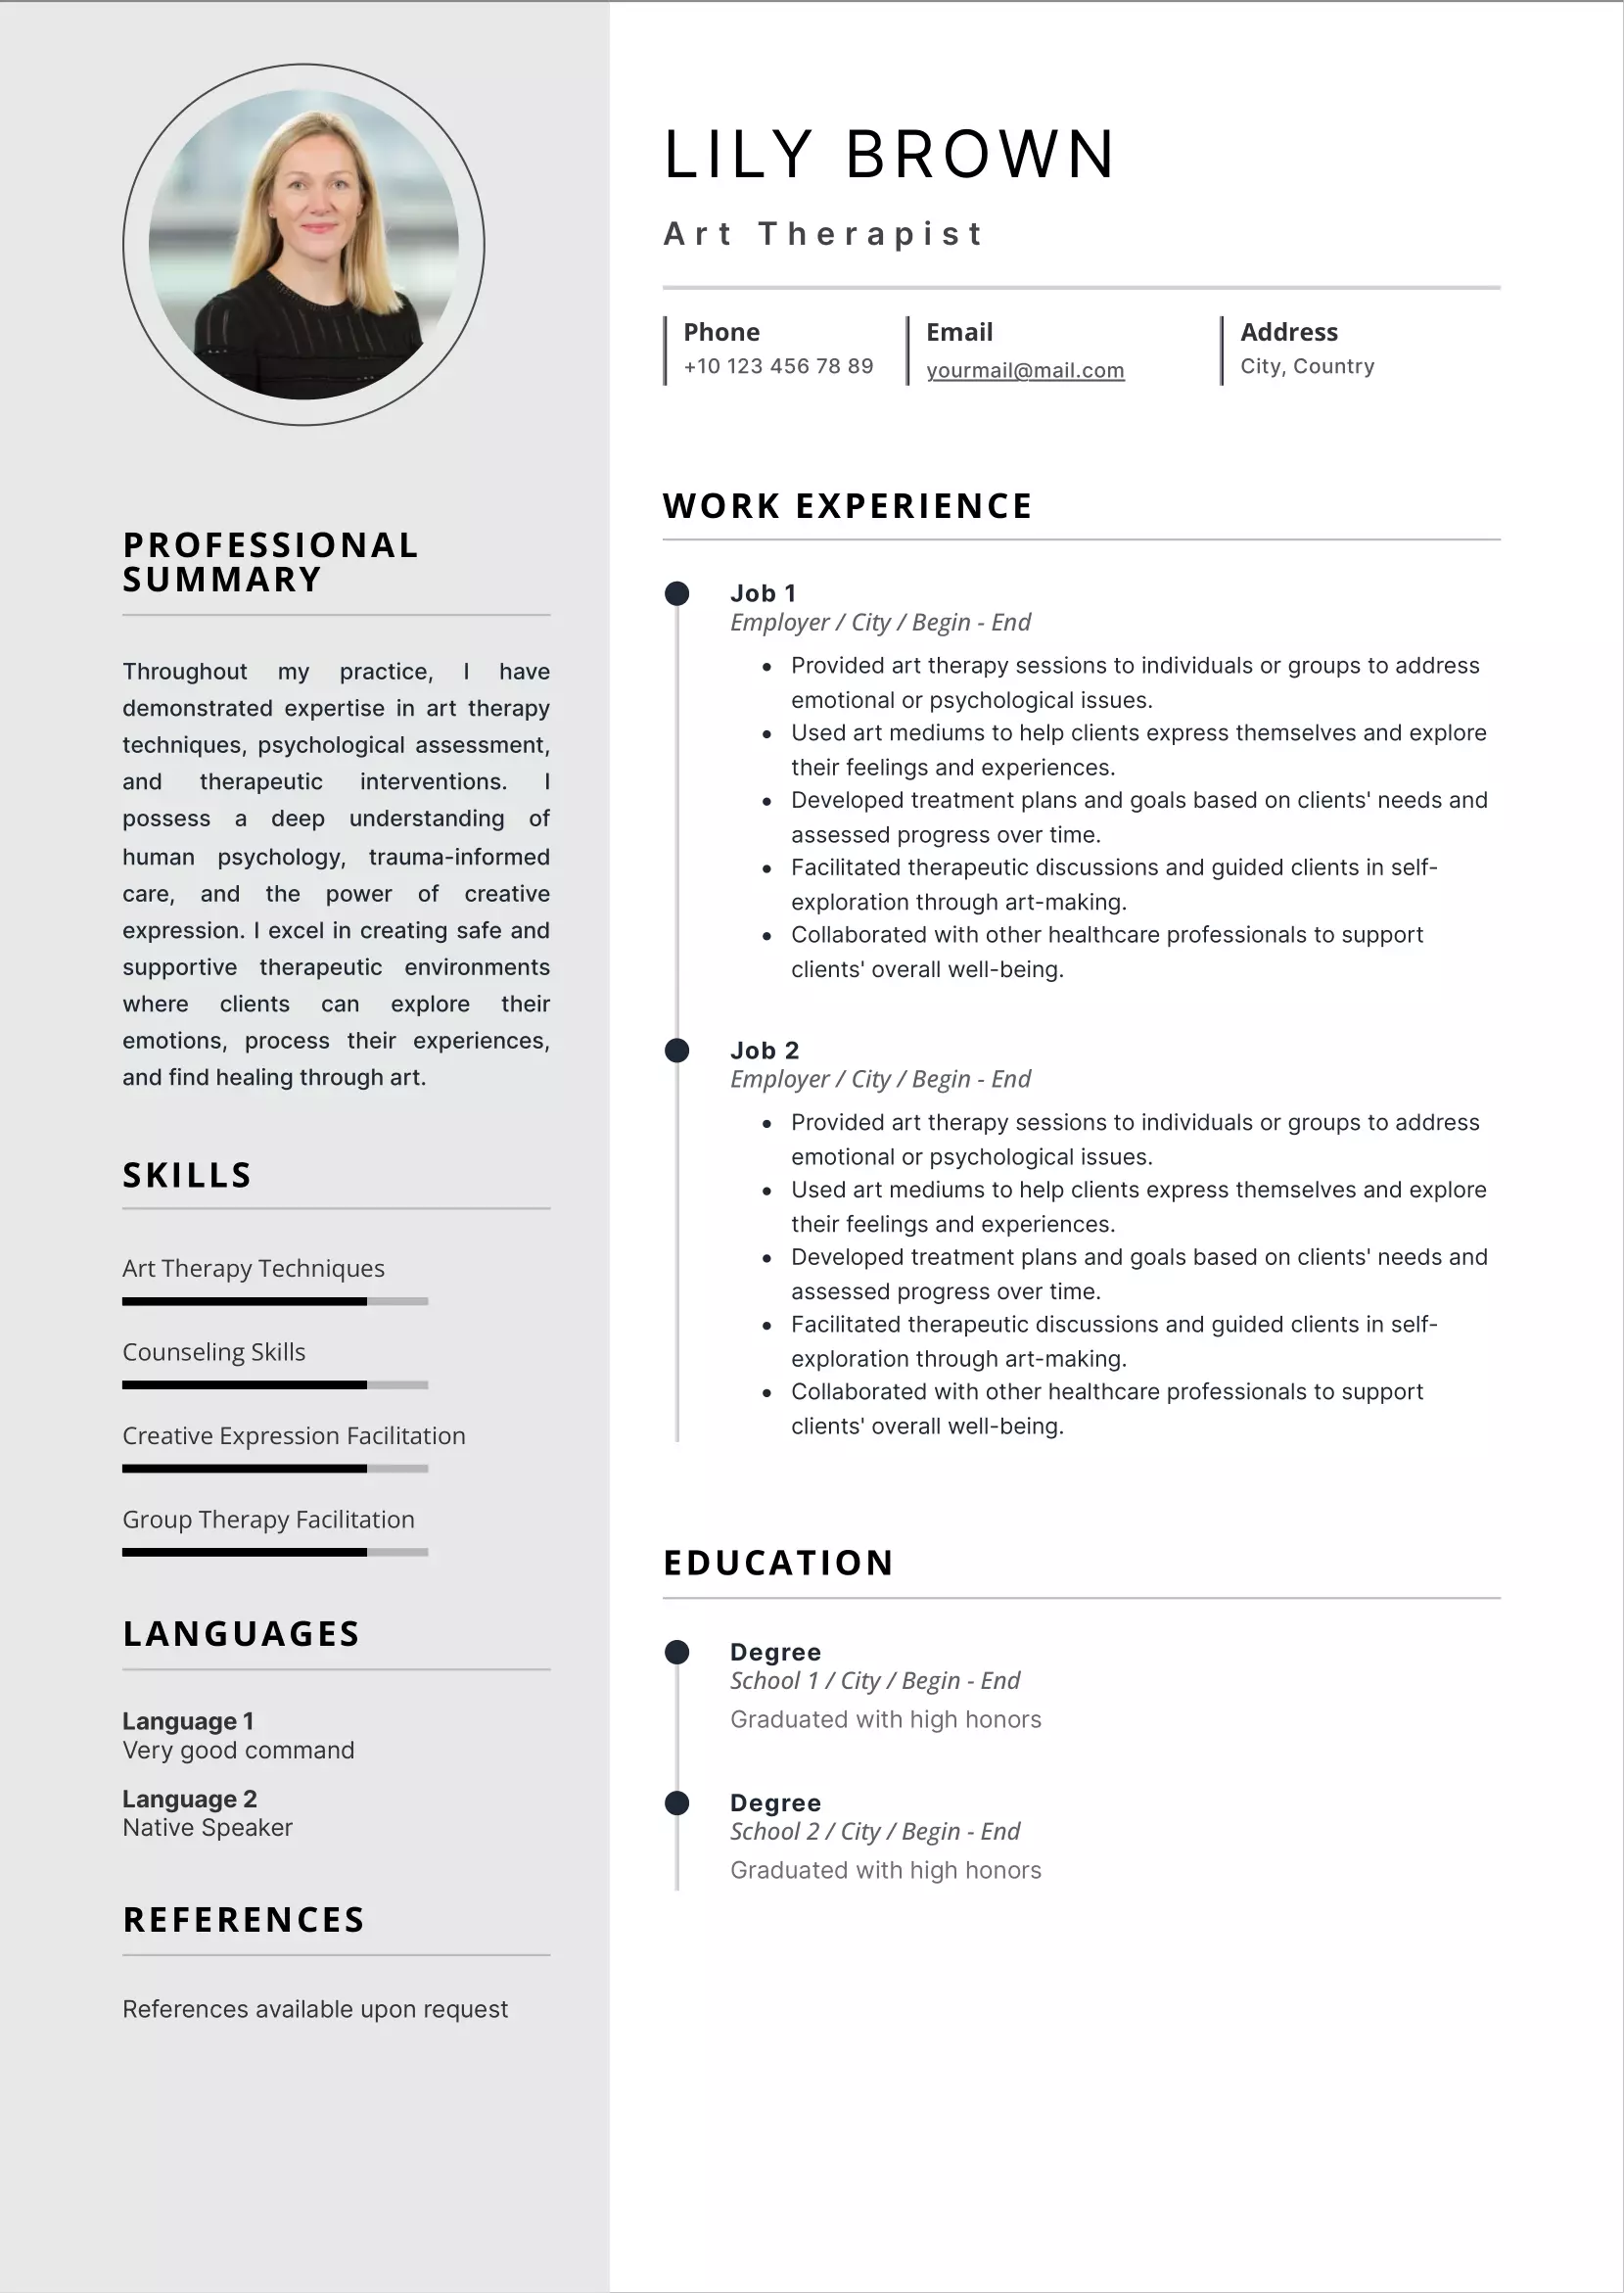 Art therapist resume examples CV